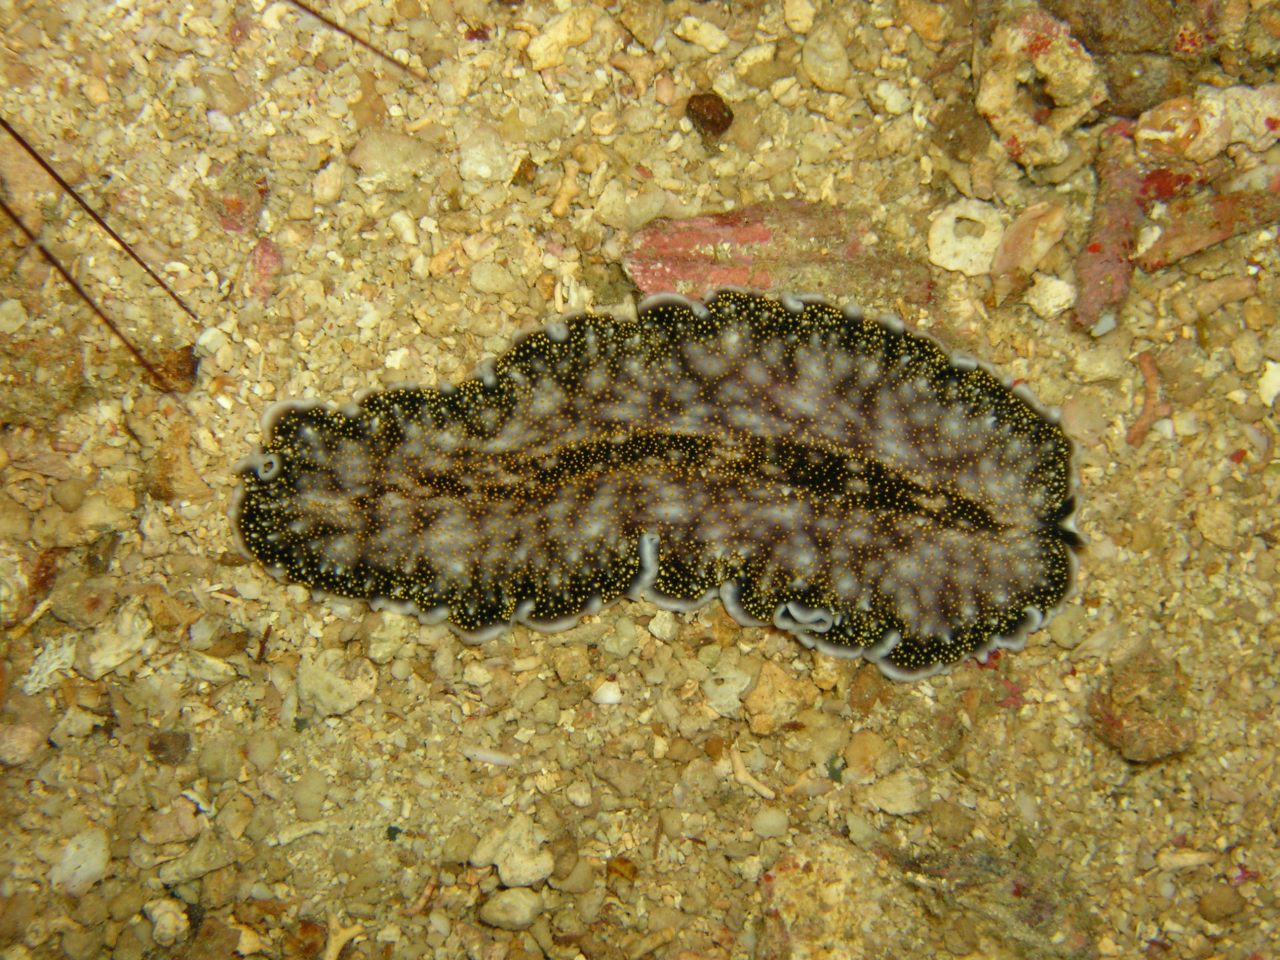 Acanthozoon sp. flatworm